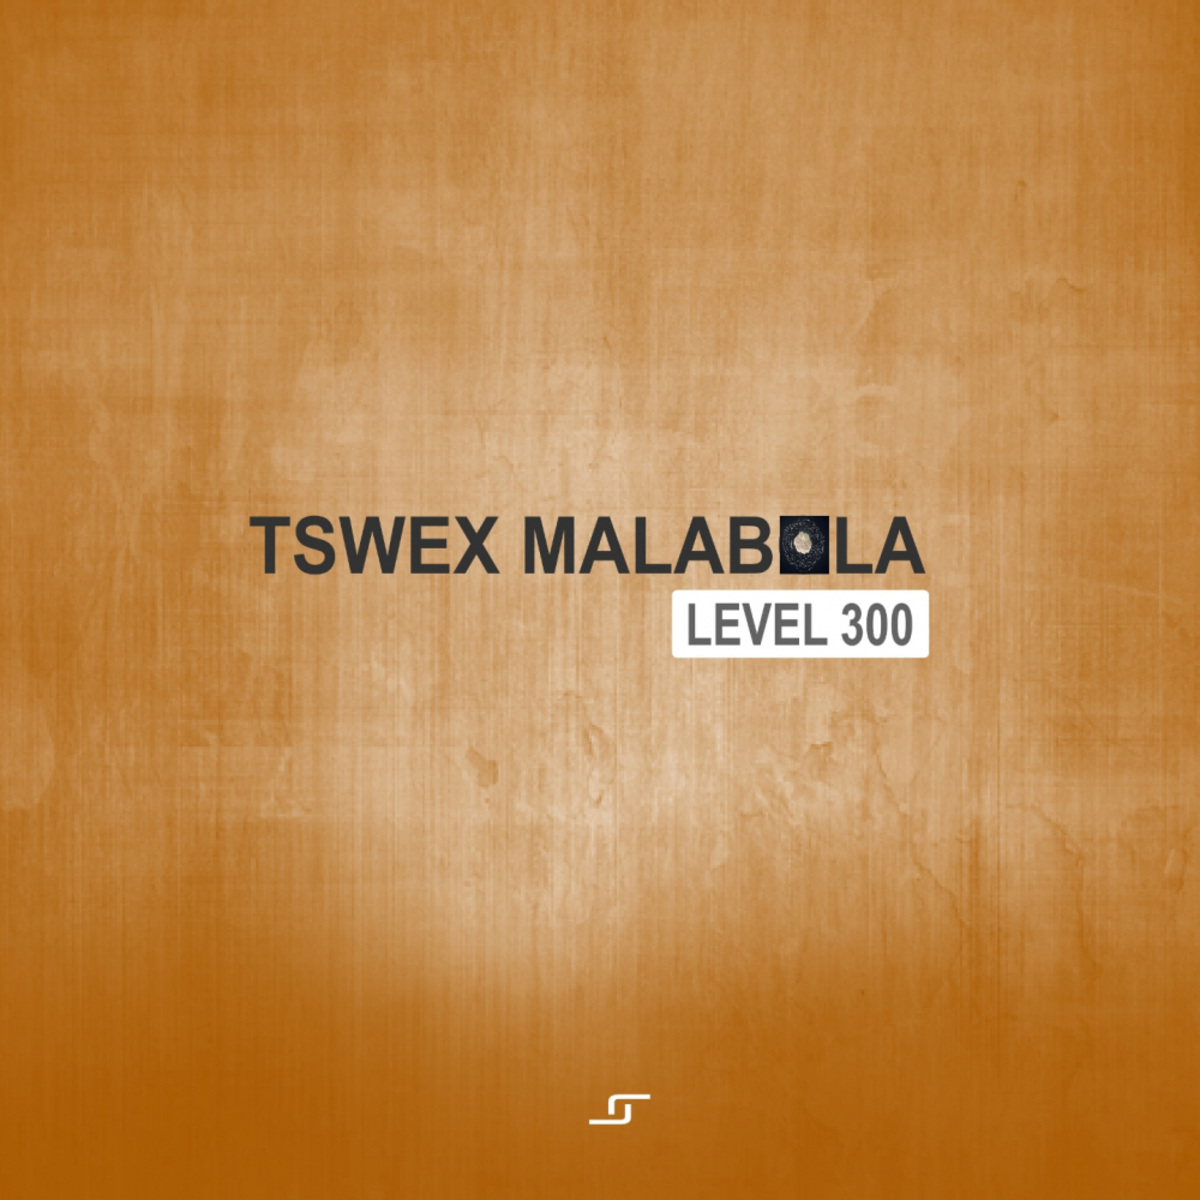 Tswex Malabola - Level 300 / Lilac Jeans Records